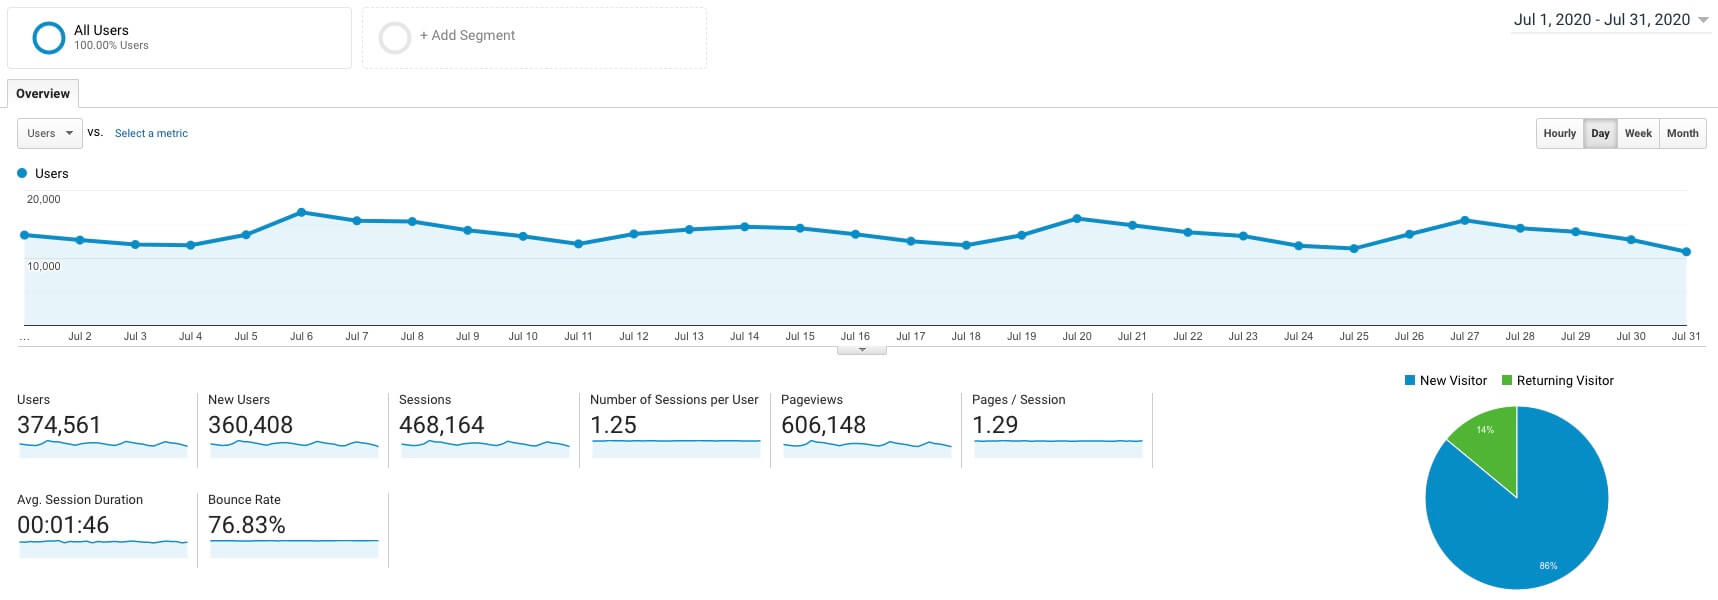 Blog Income Report July 2020 Google Analytics Screenshot of Traffic (ryrob)